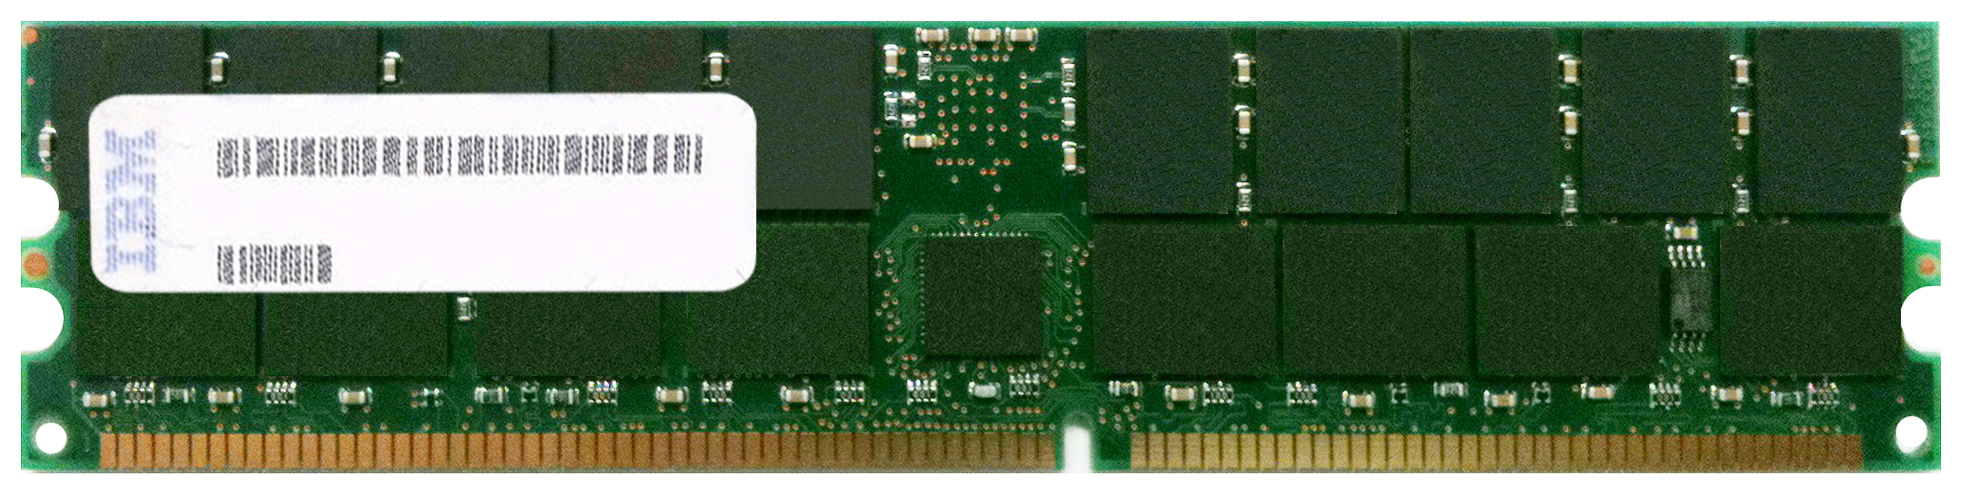 44P3960 IBM 4GB PC2100 DDR-266MHz Registered ECC CL2.5 208-Pin DIMM 2.5V Memory Module